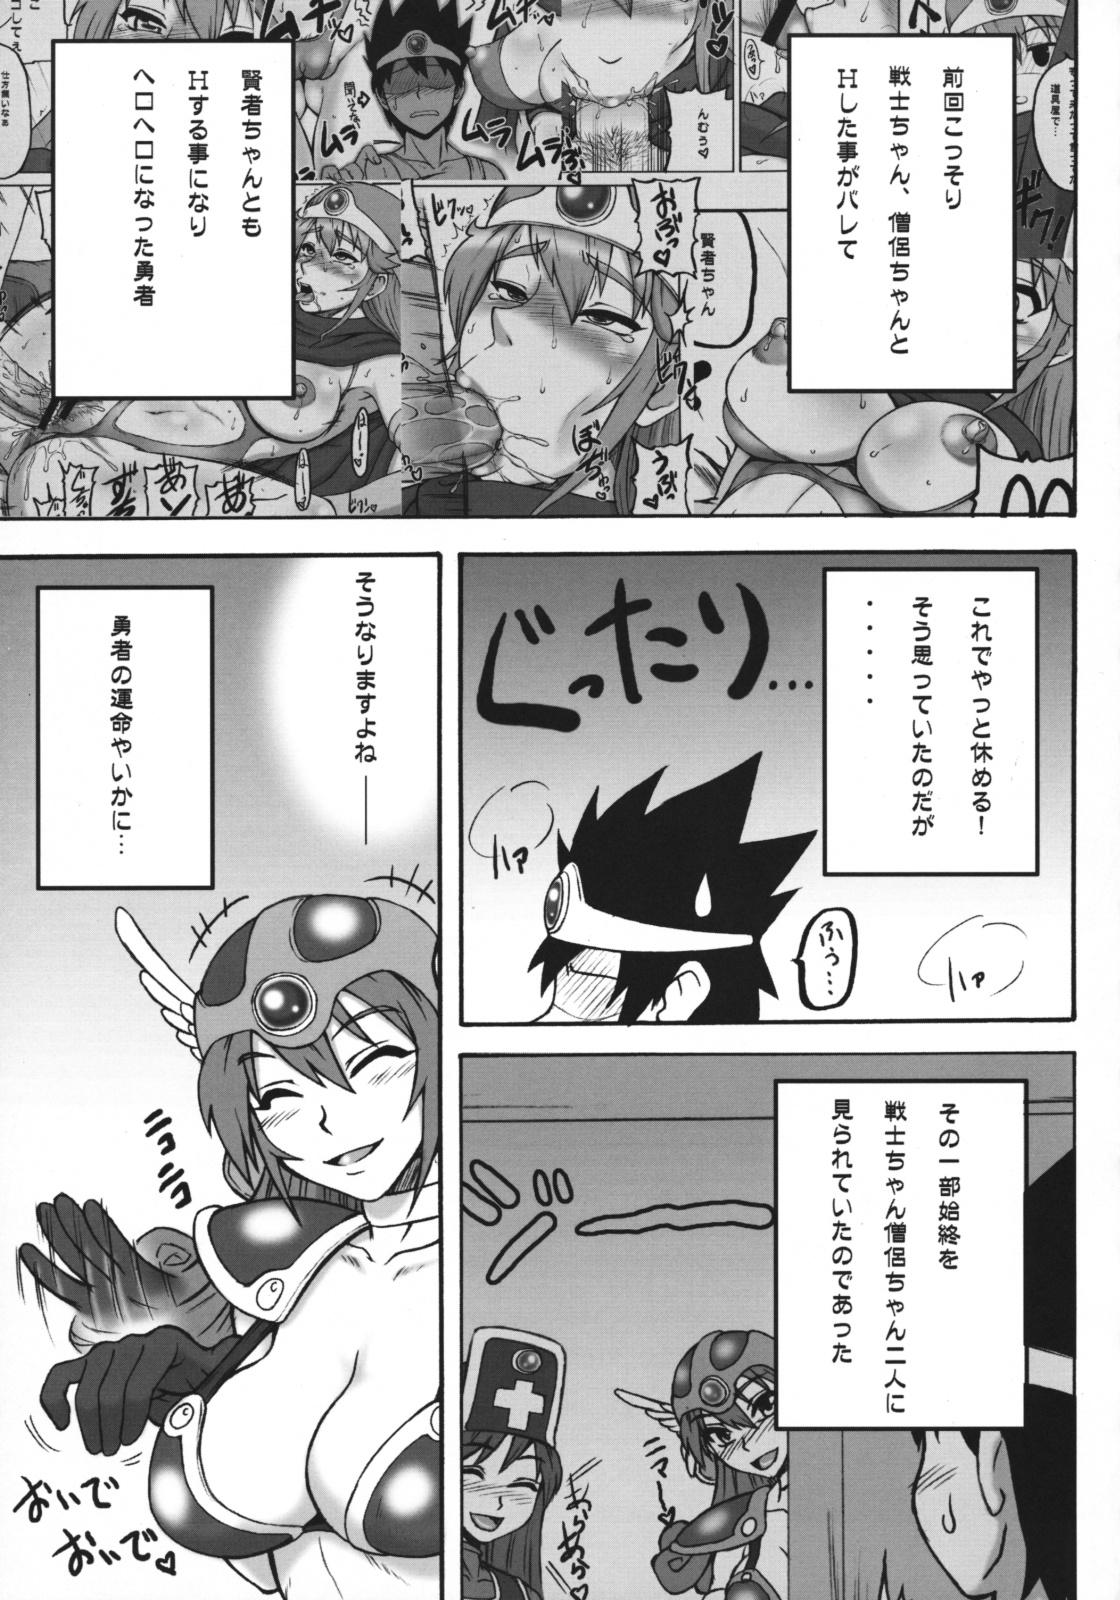 Humiliation Pov Touko IV - Dragon quest iii This - Page 4